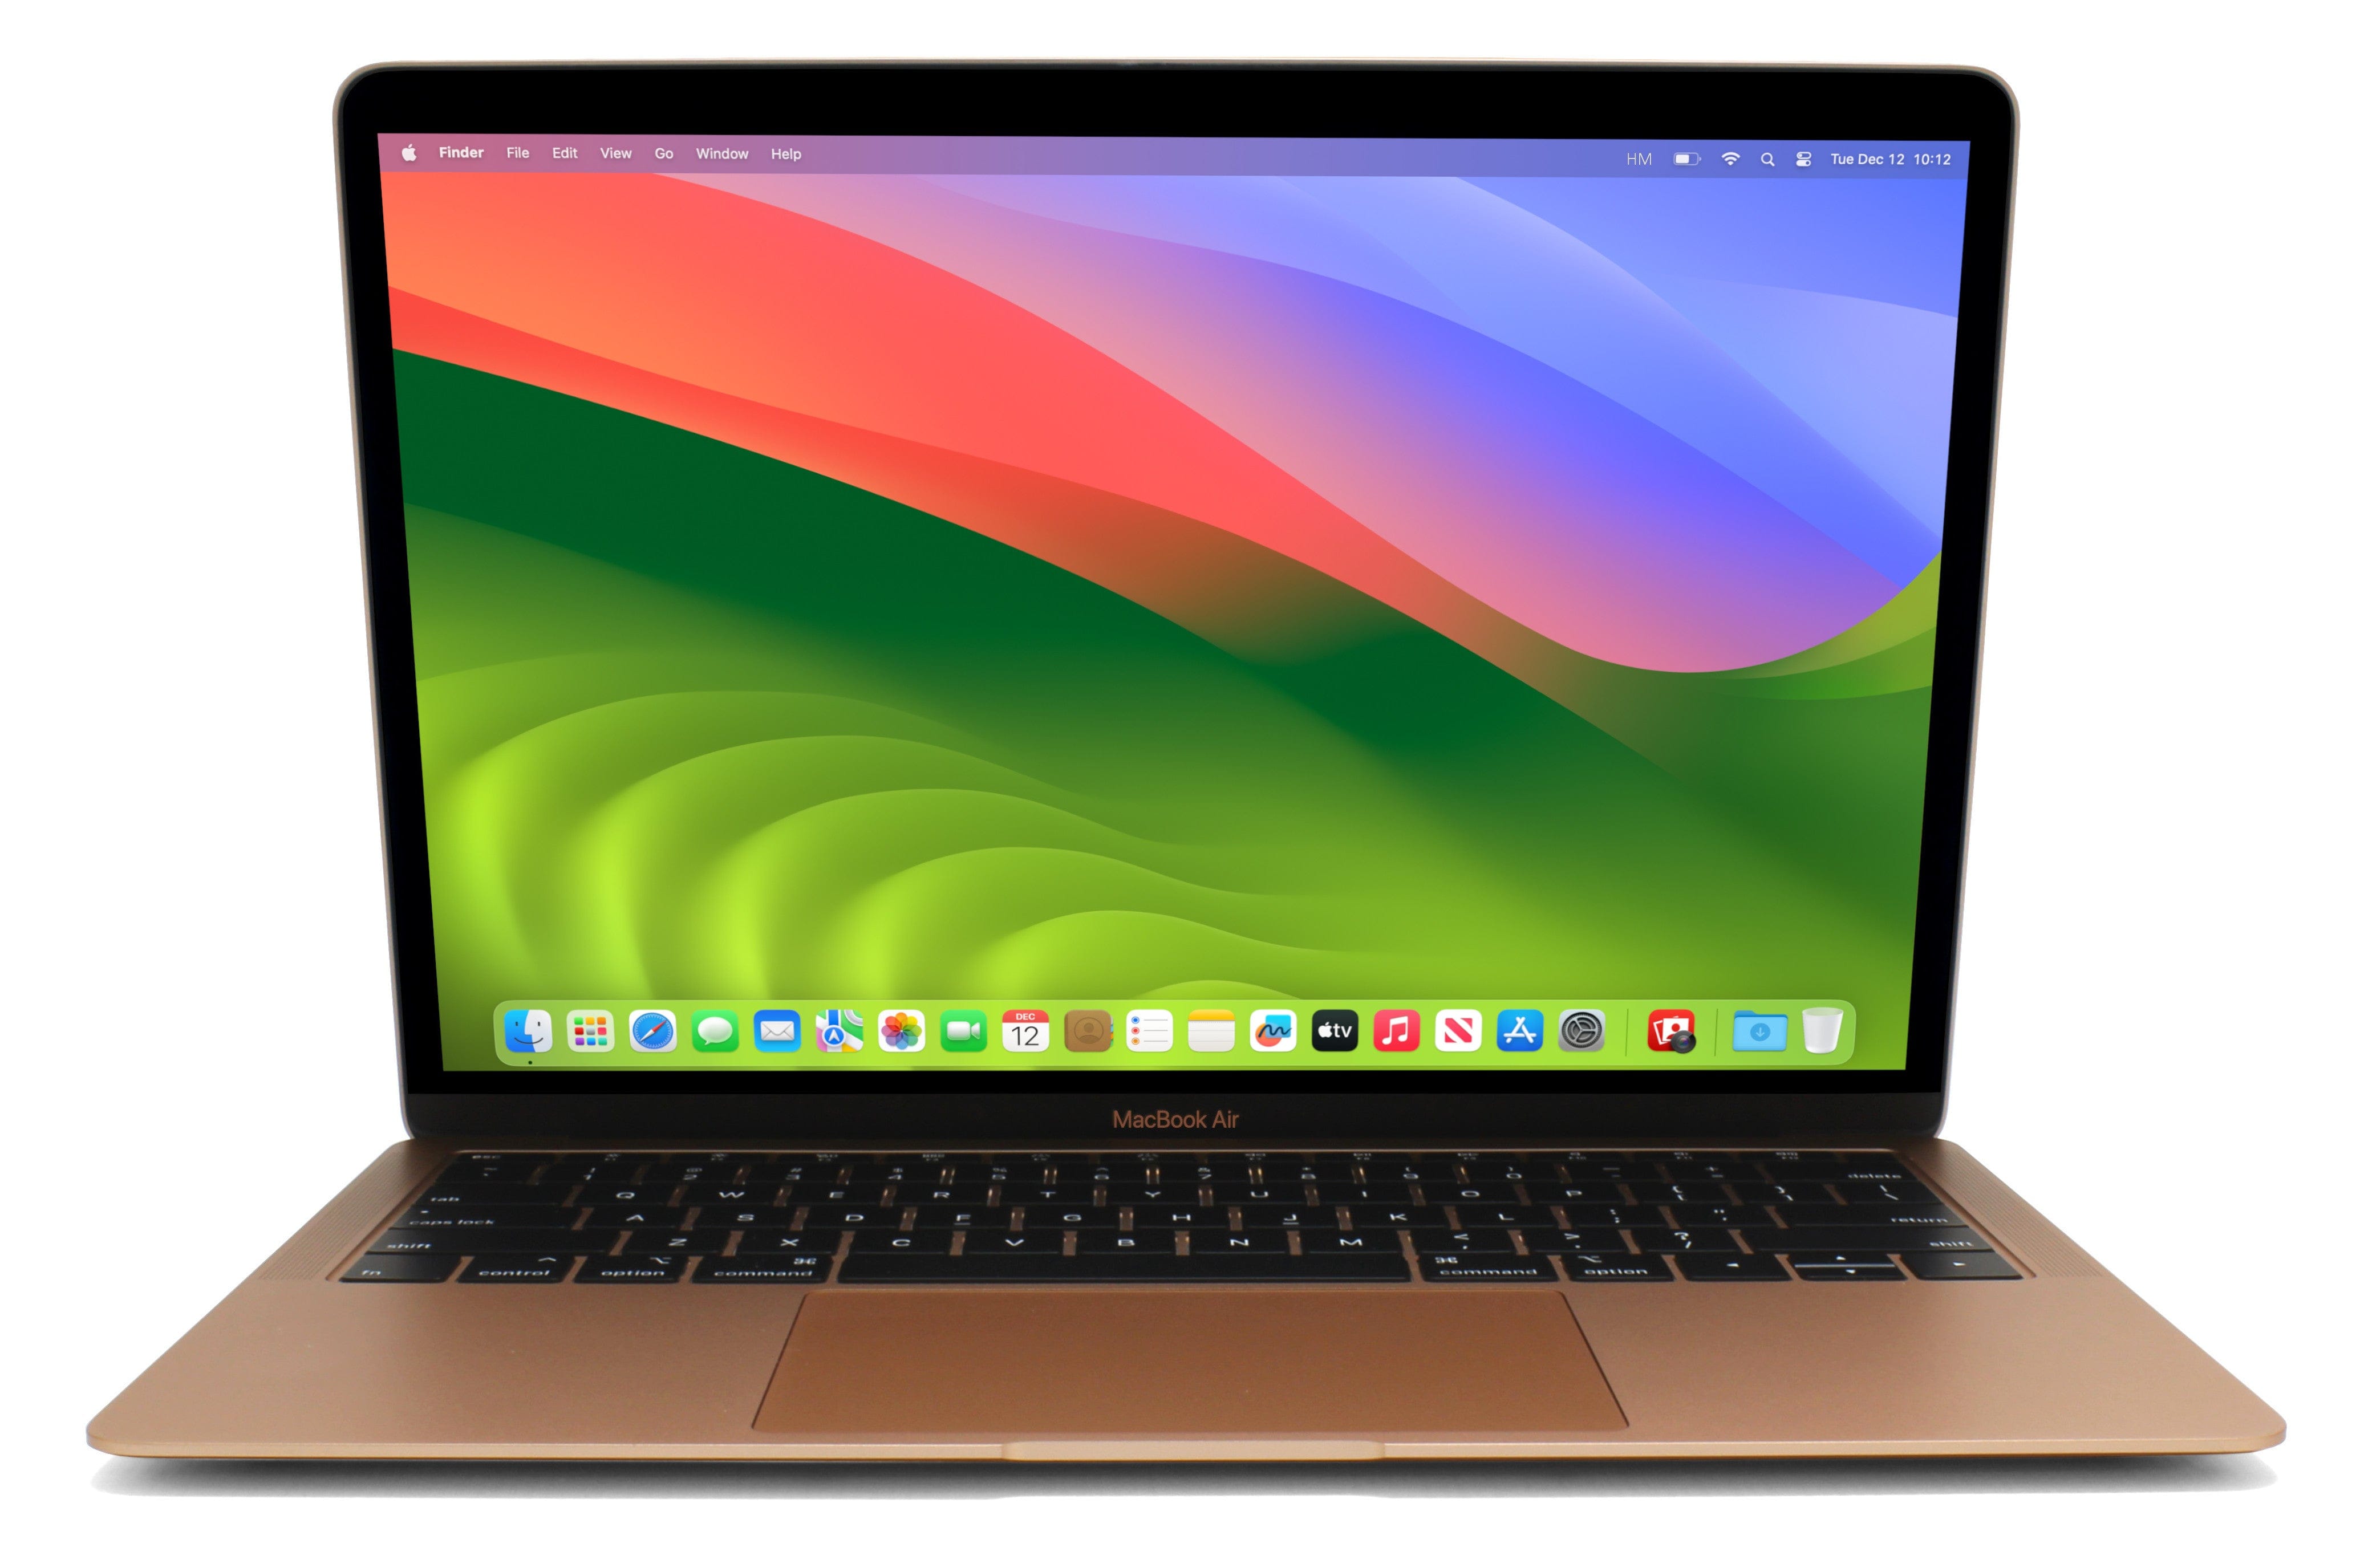 MacBook Air 13-inch Core i5 1.6GHz (Gold, 2019) - Good